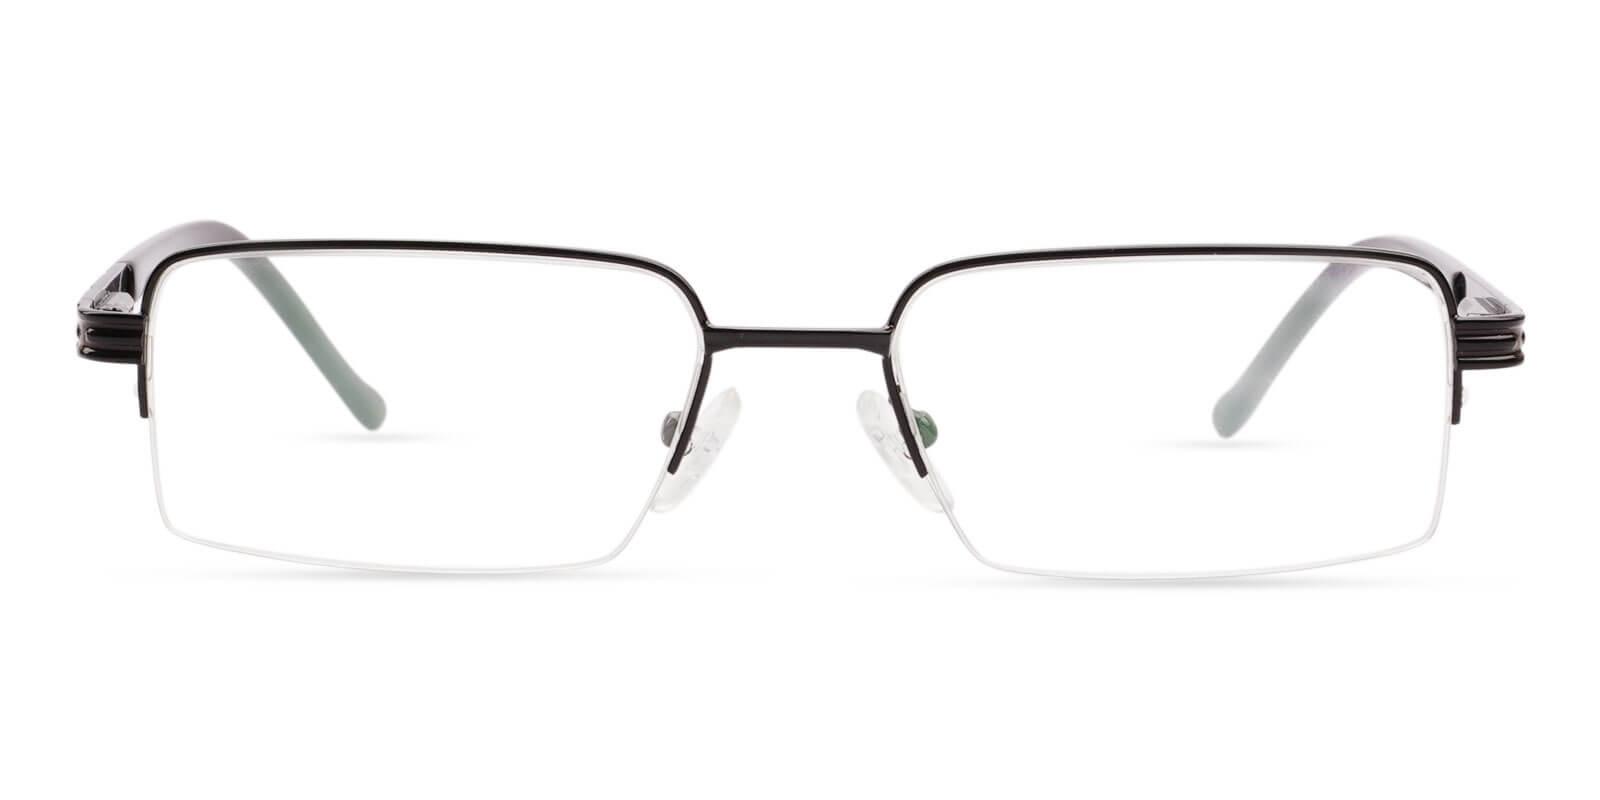 Nicaragua Black Metal Eyeglasses , NosePads , SpringHinges Frames from ABBE Glasses